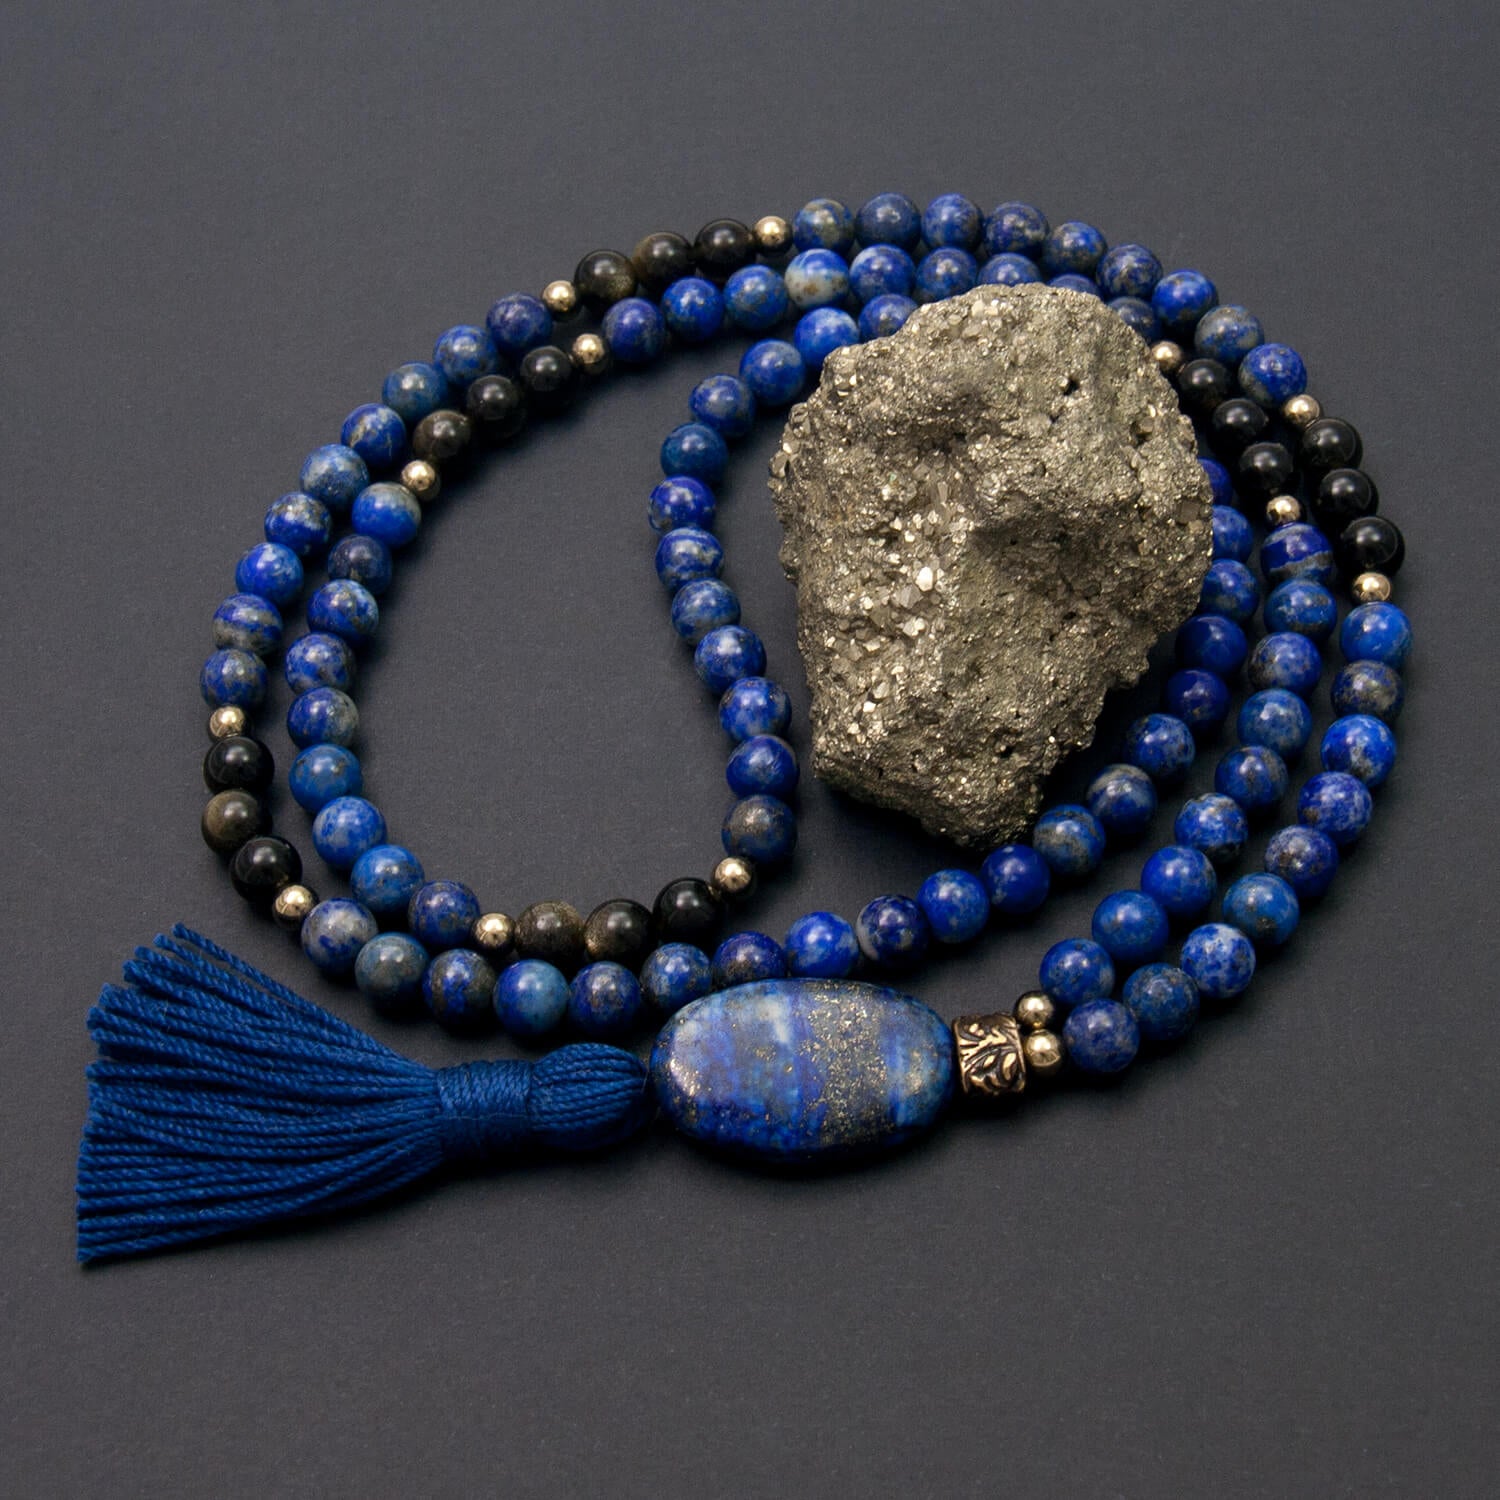 Lapis Lazuli Mala Necklace with Obsidian